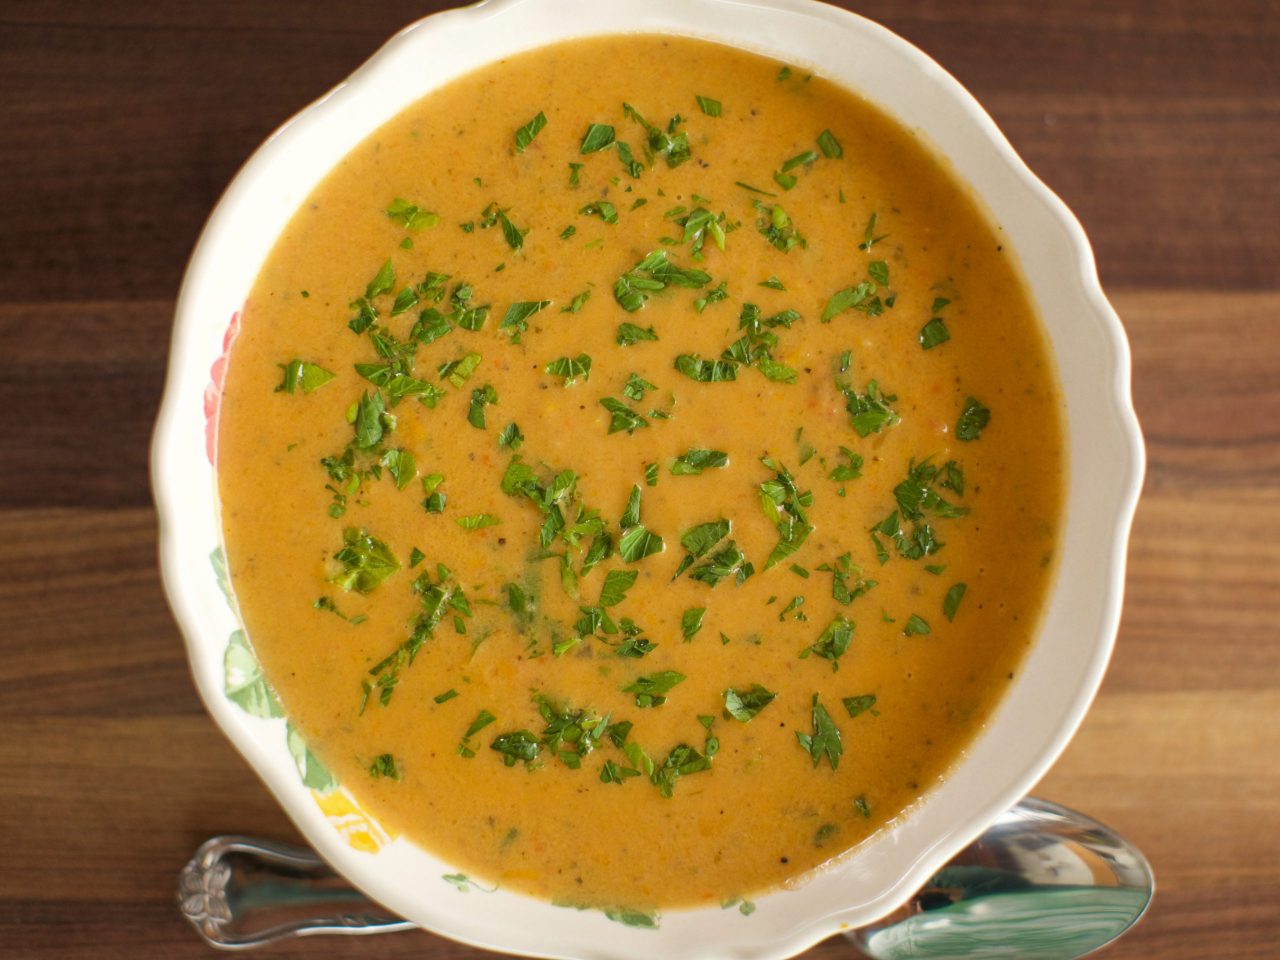 Ree Drummond's Roasted Vegetable Soup, as seen on The Pioneer Woman, Season 19.